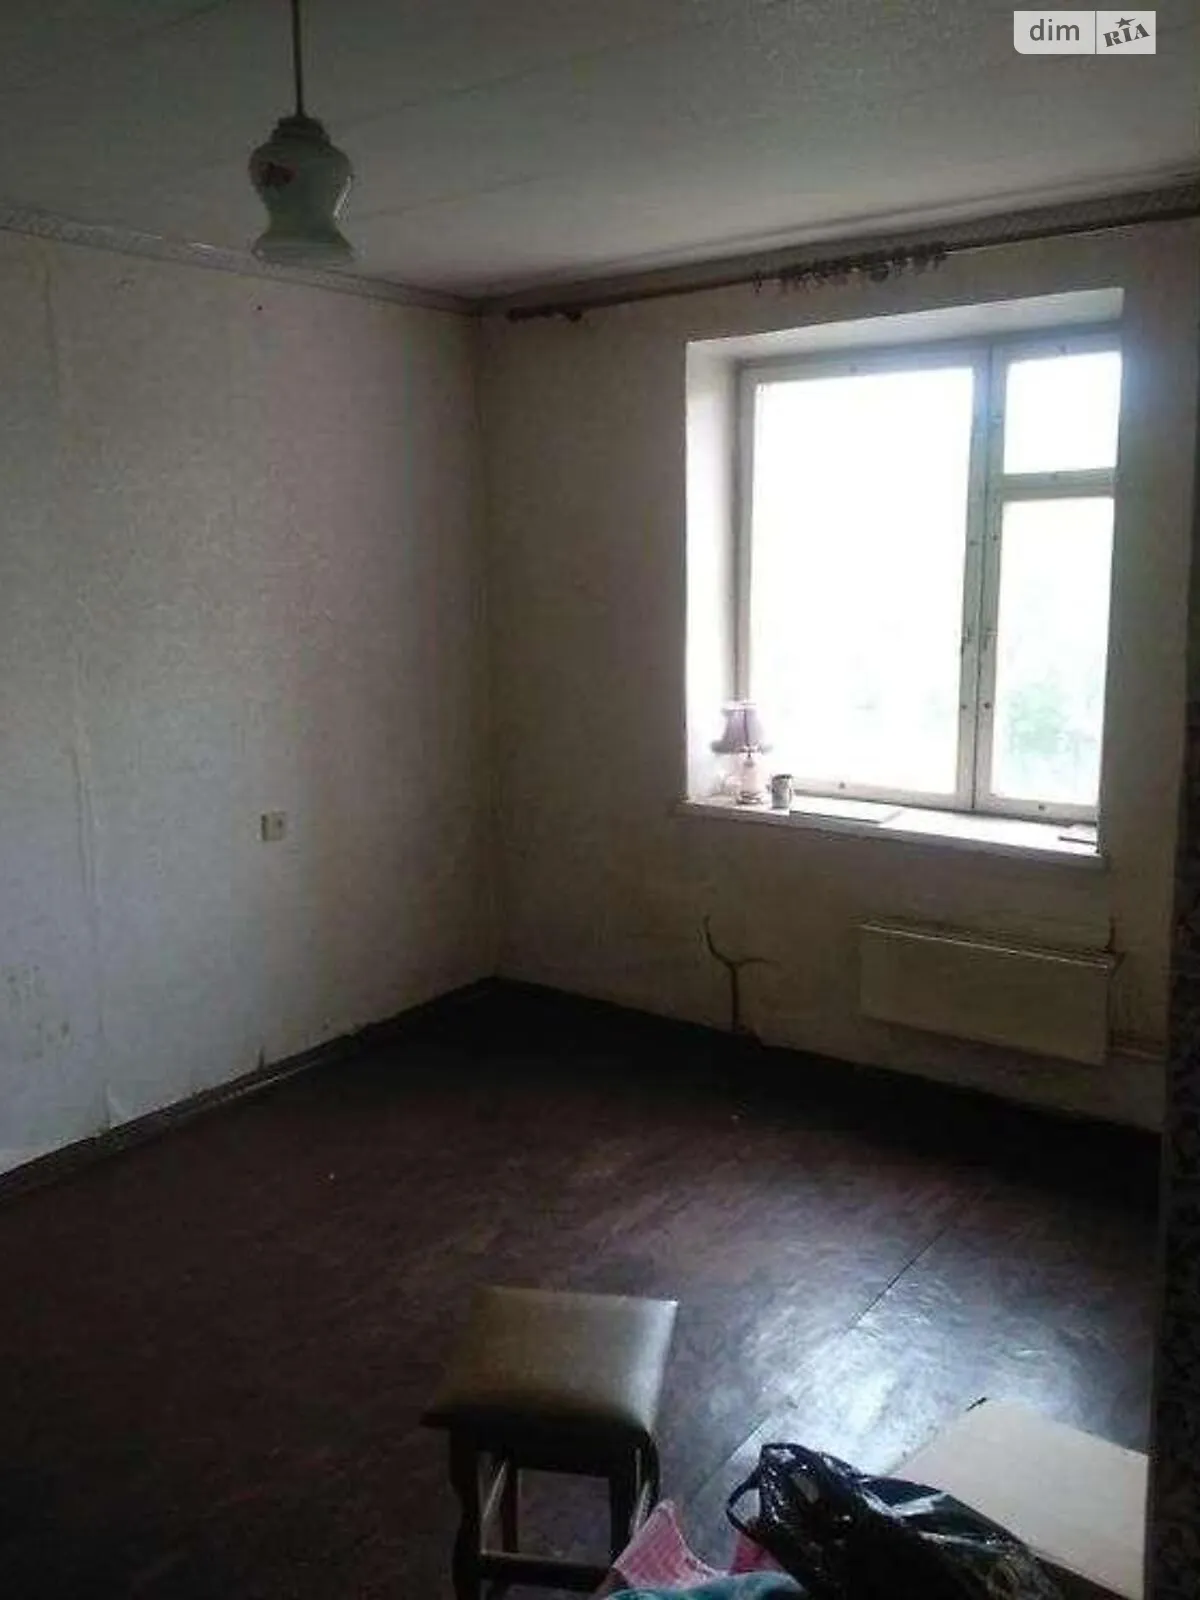 Продается комната 36 кв. м в Харькове - фото 3